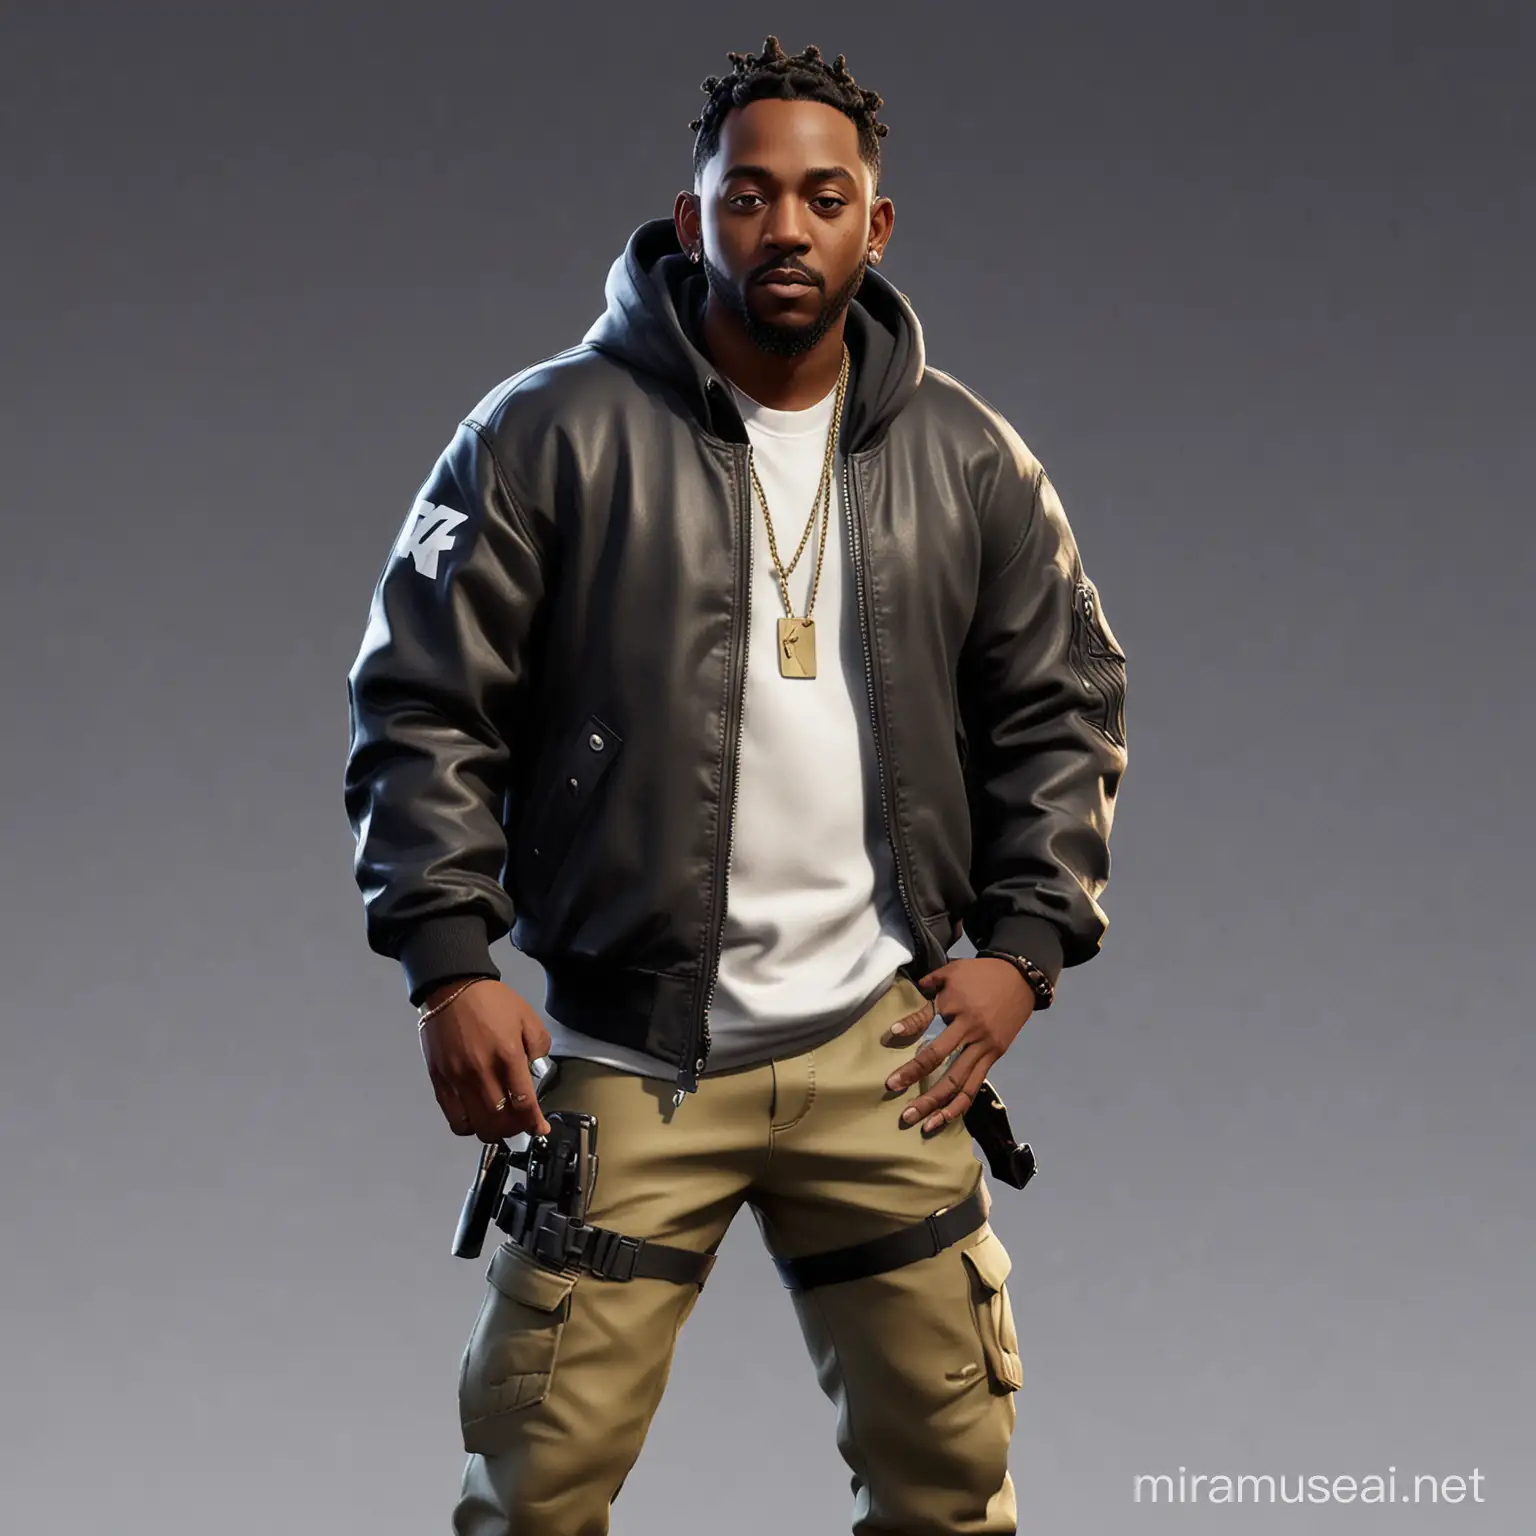 Kendrick Lamar Fortnite Skin Iconic Rapper Joins the Battle Royale